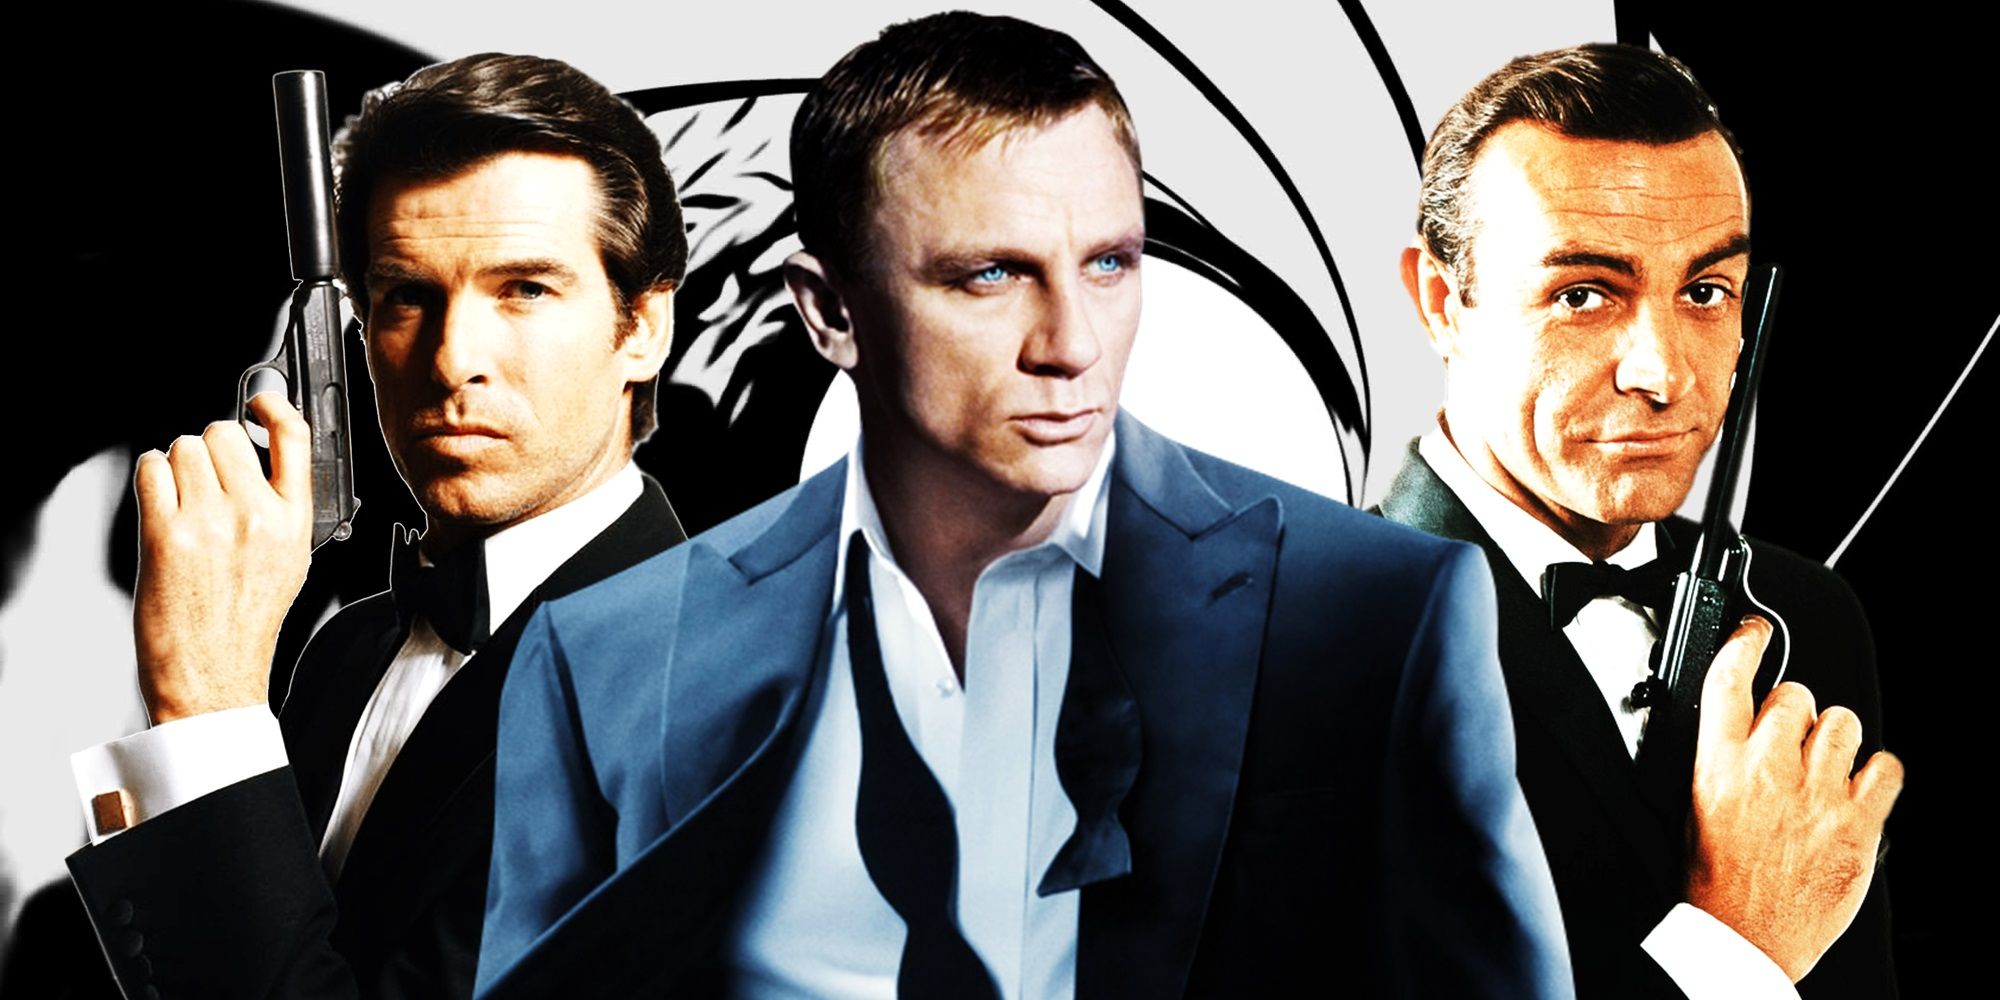 Collage of Pierce Brosnan, Daniel Craig, and Sean Connery as James Bond